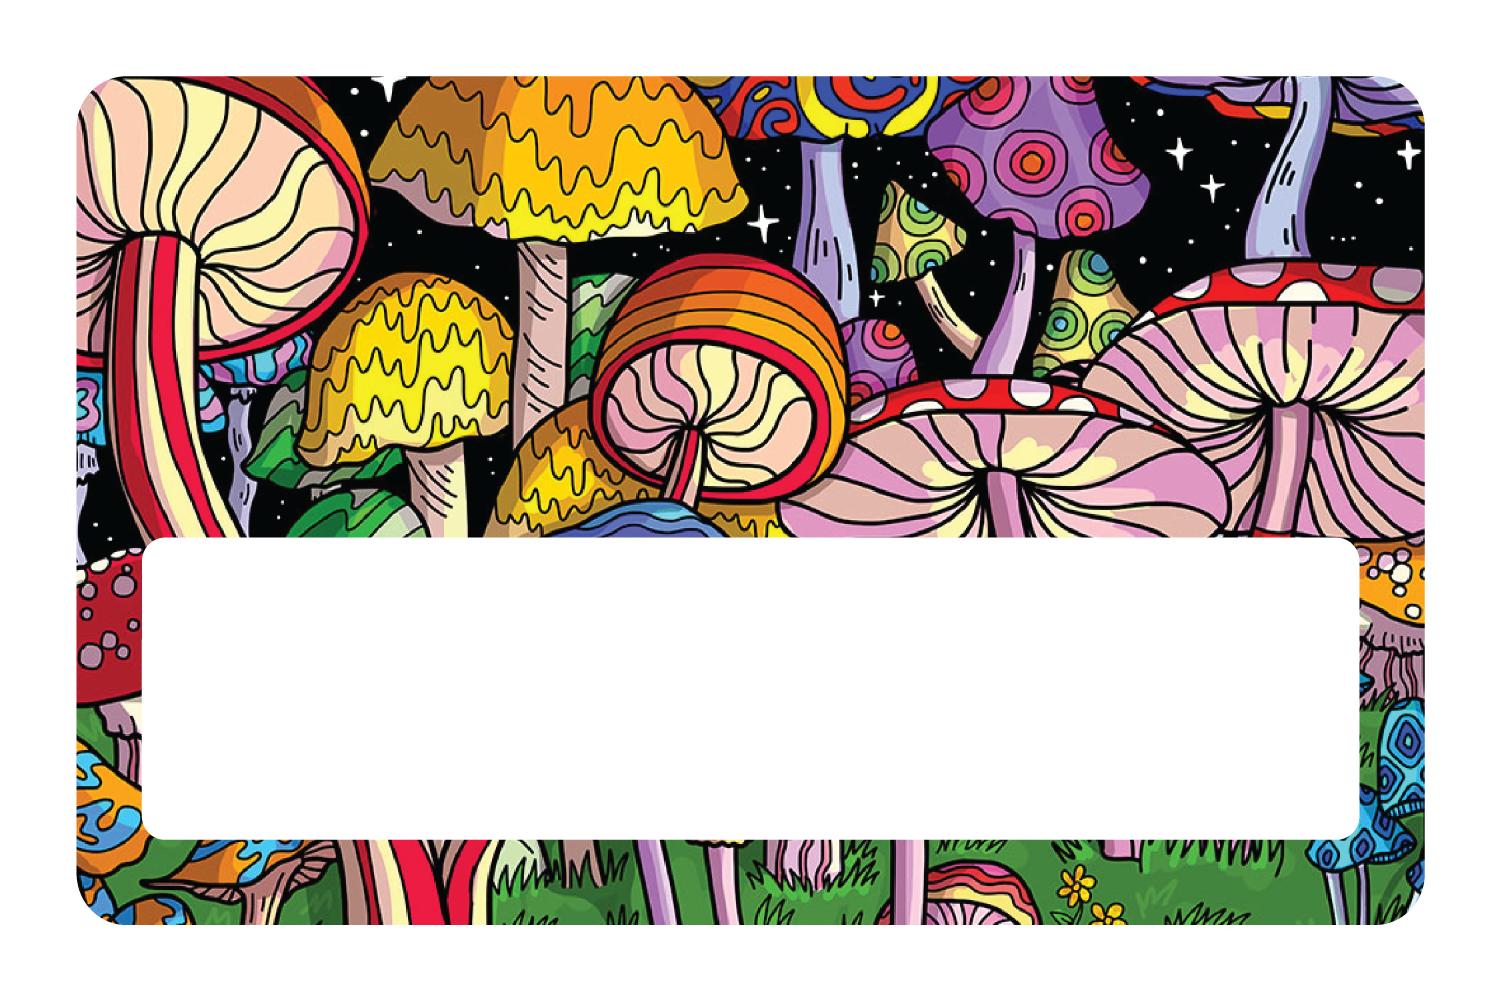 Mushroom Forest